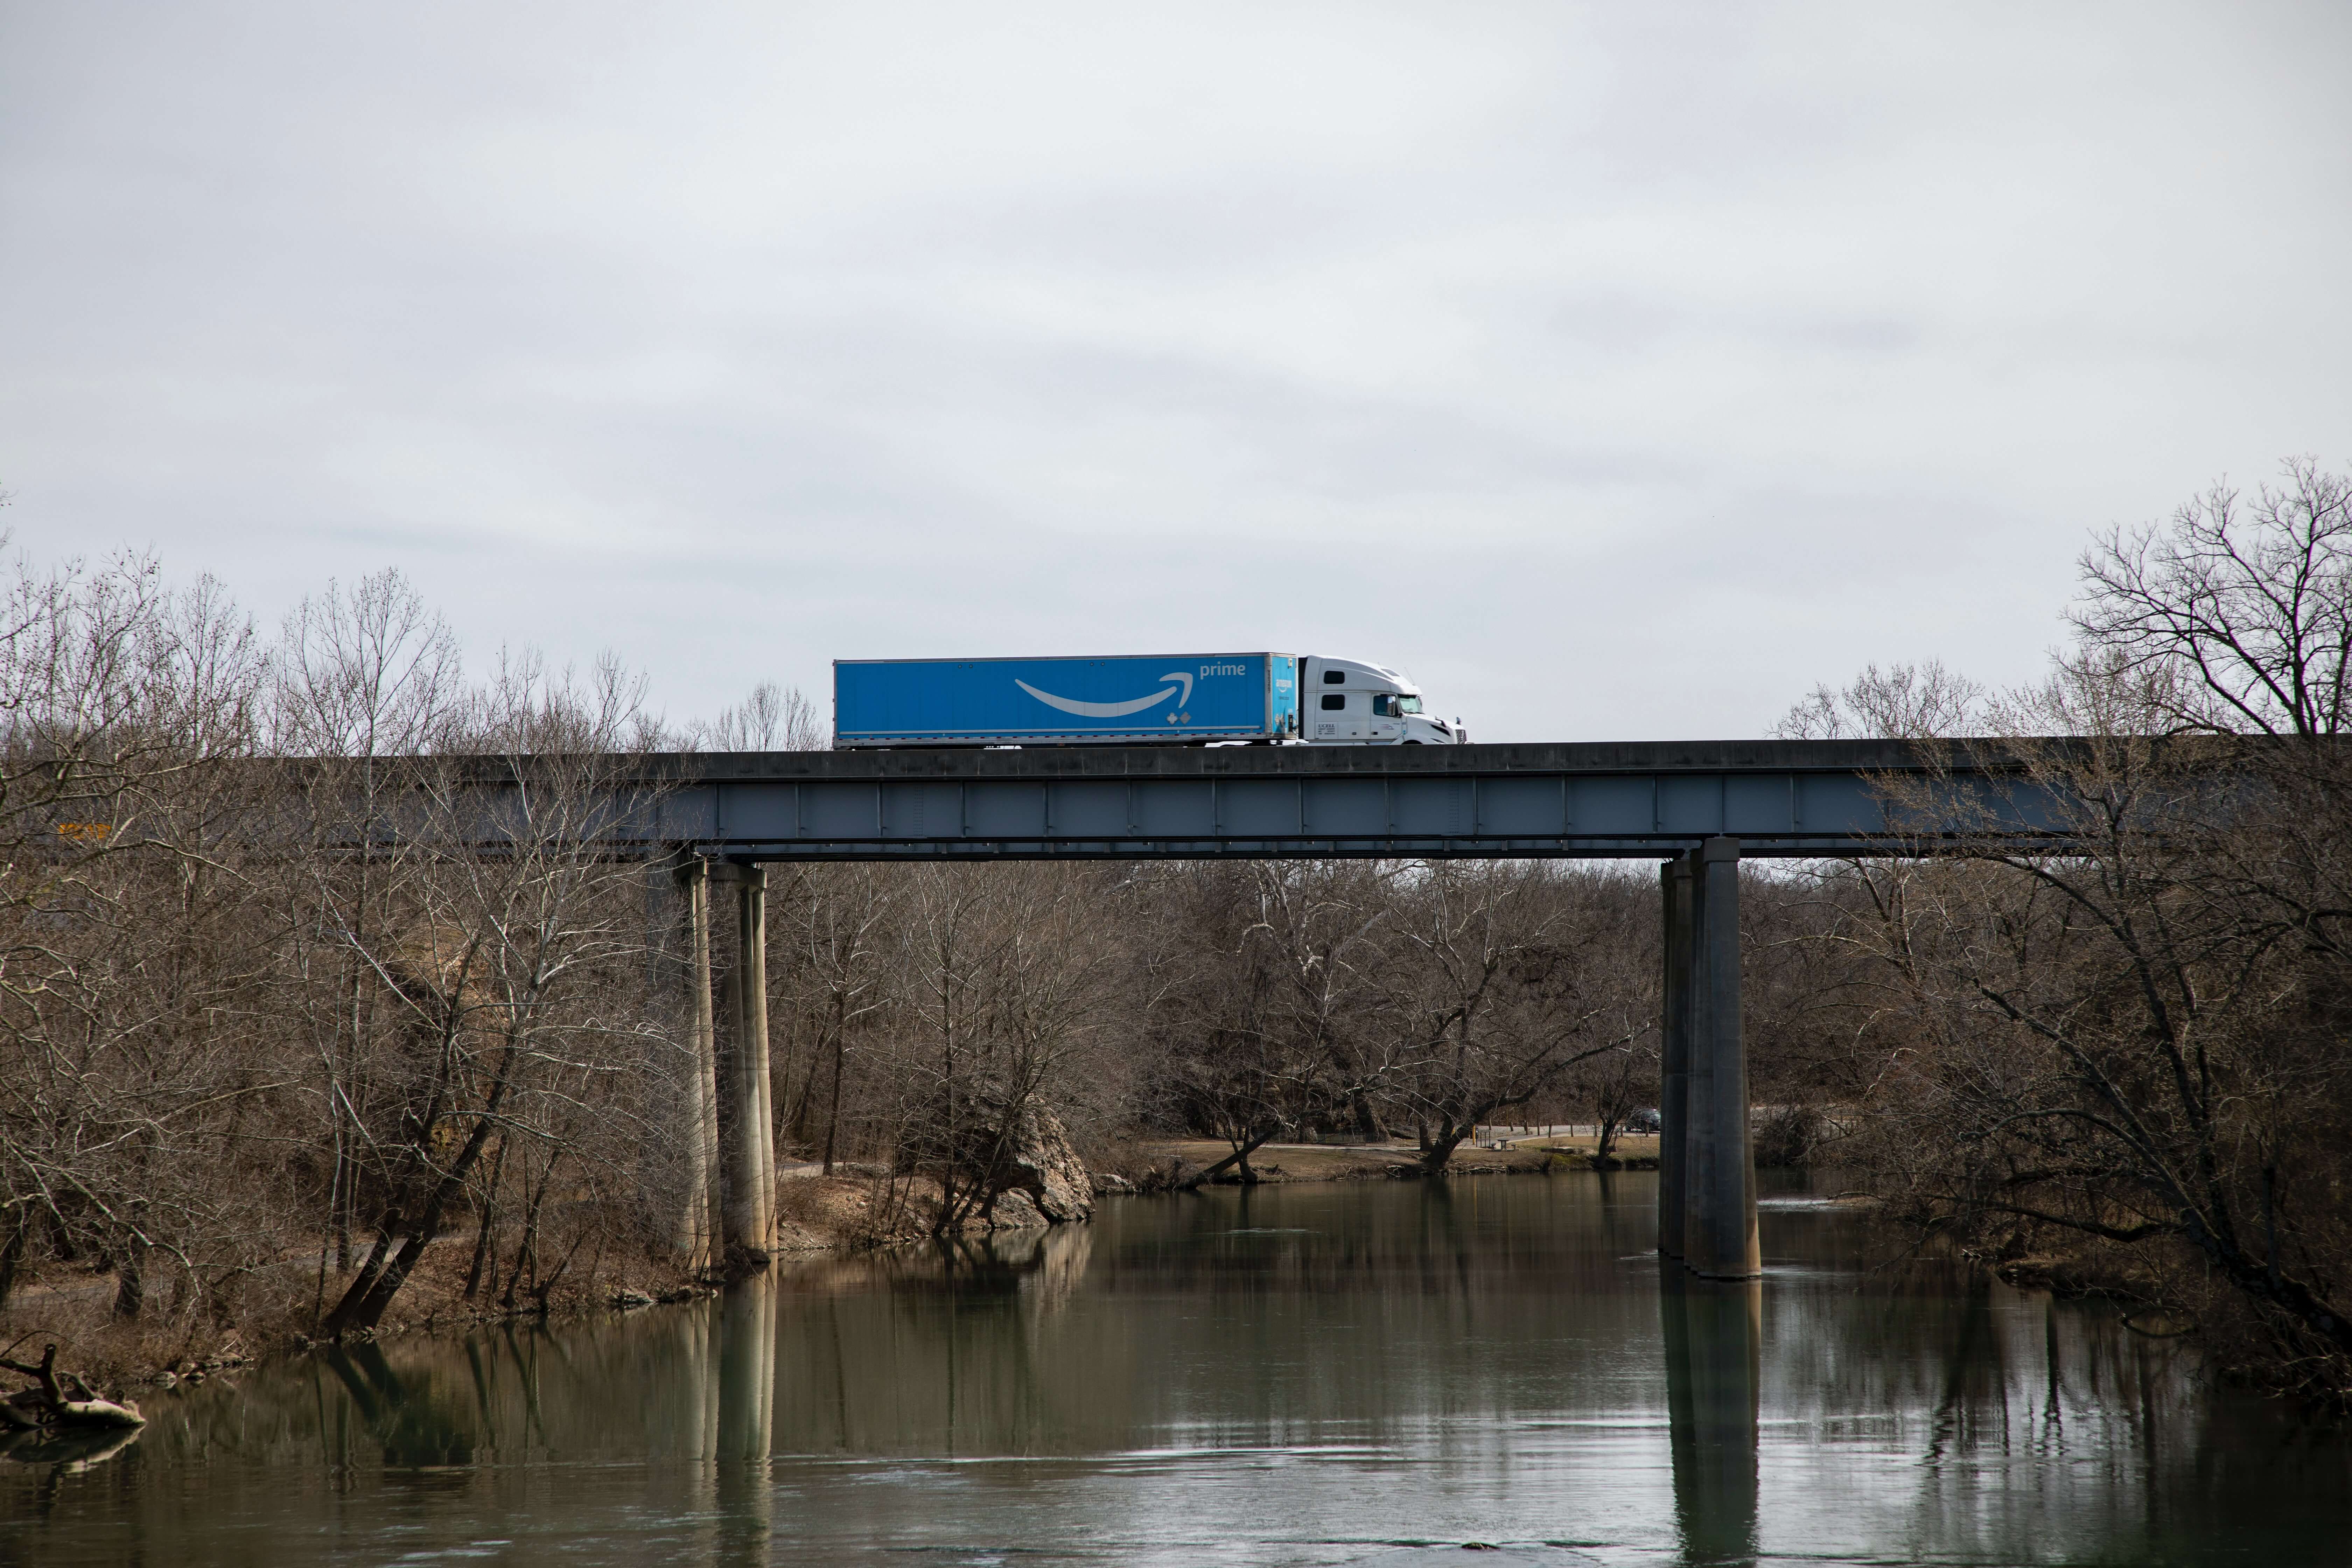 An Amazon truck drives over a bridge.